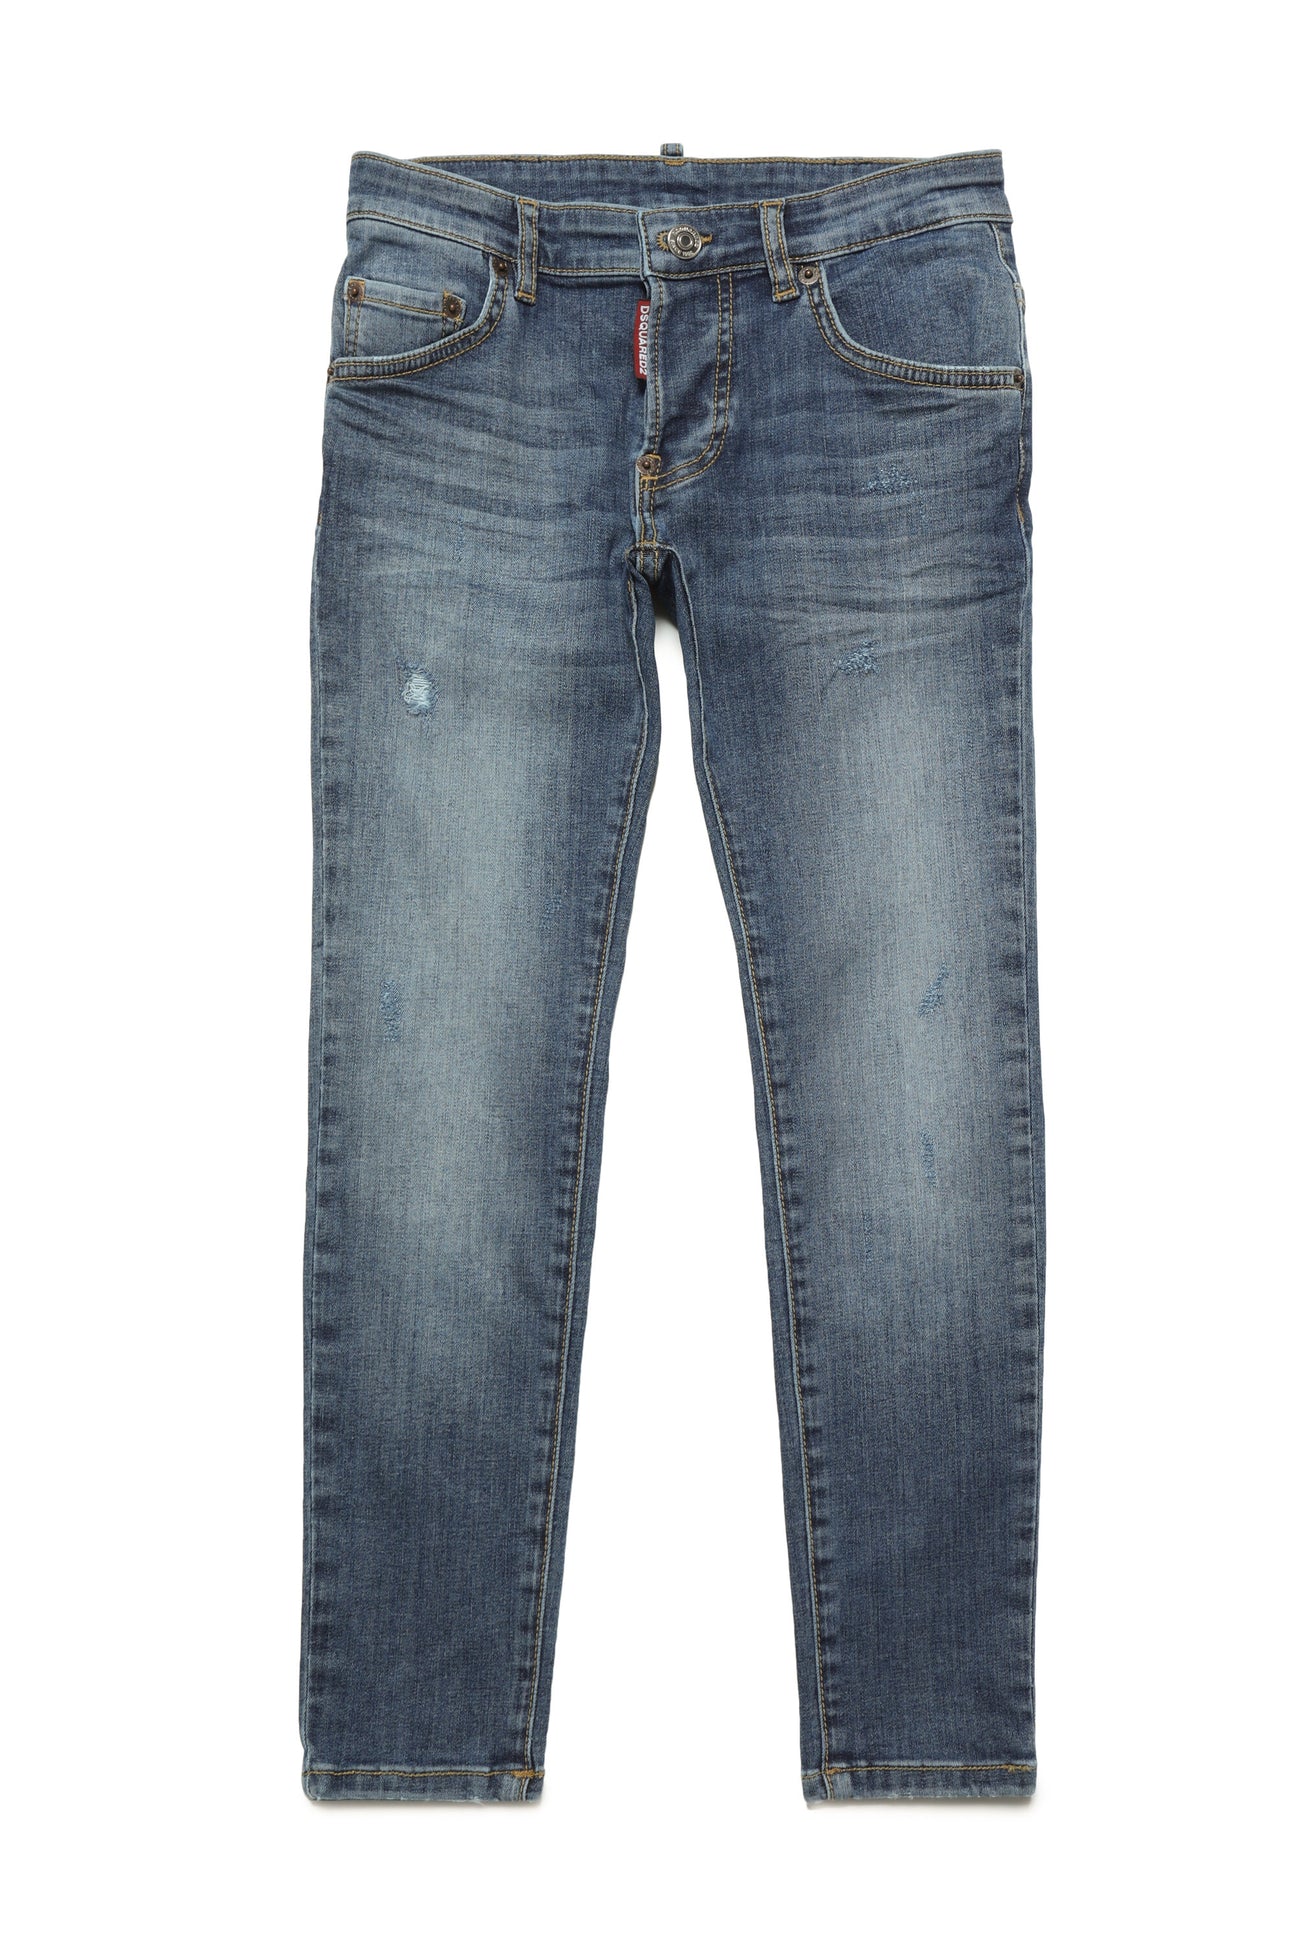 Jeans Skater skinny medium blue shaded with breaks 